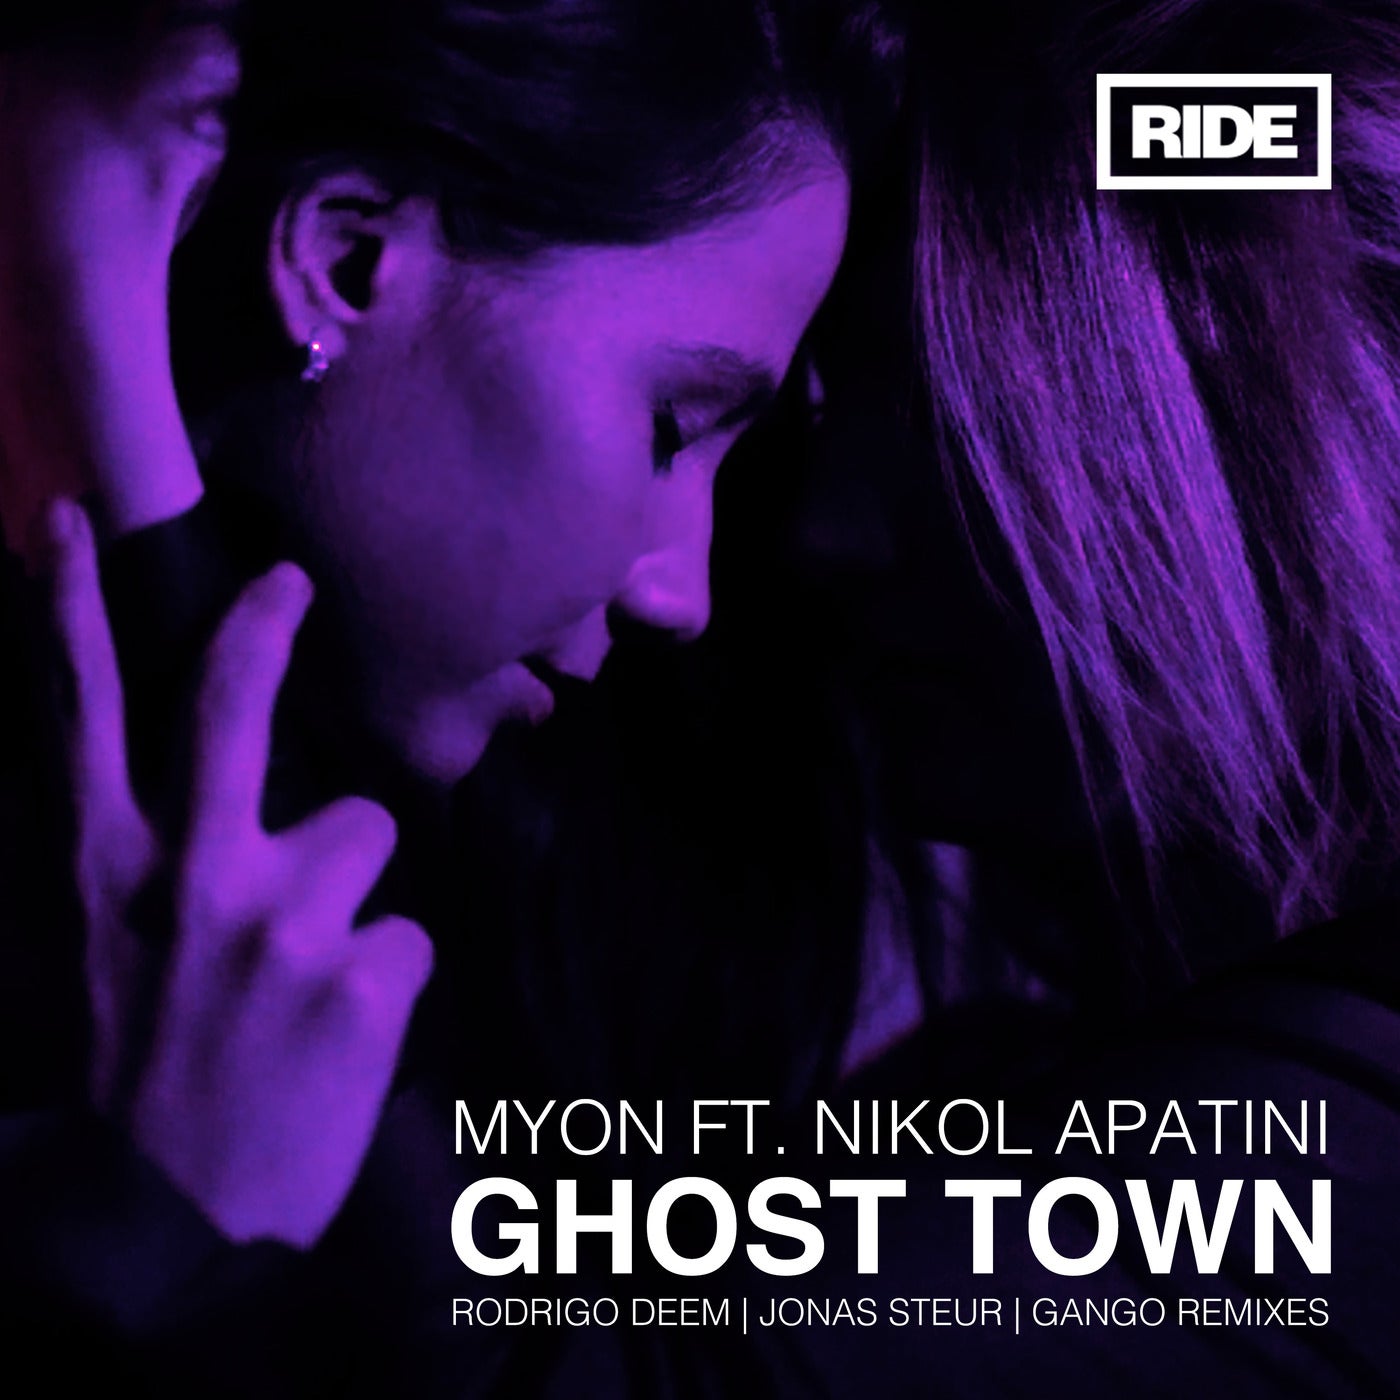 Myon Feat. Nikol Apatini - Ghost Town (Rodrigo Deem Dub Remix)